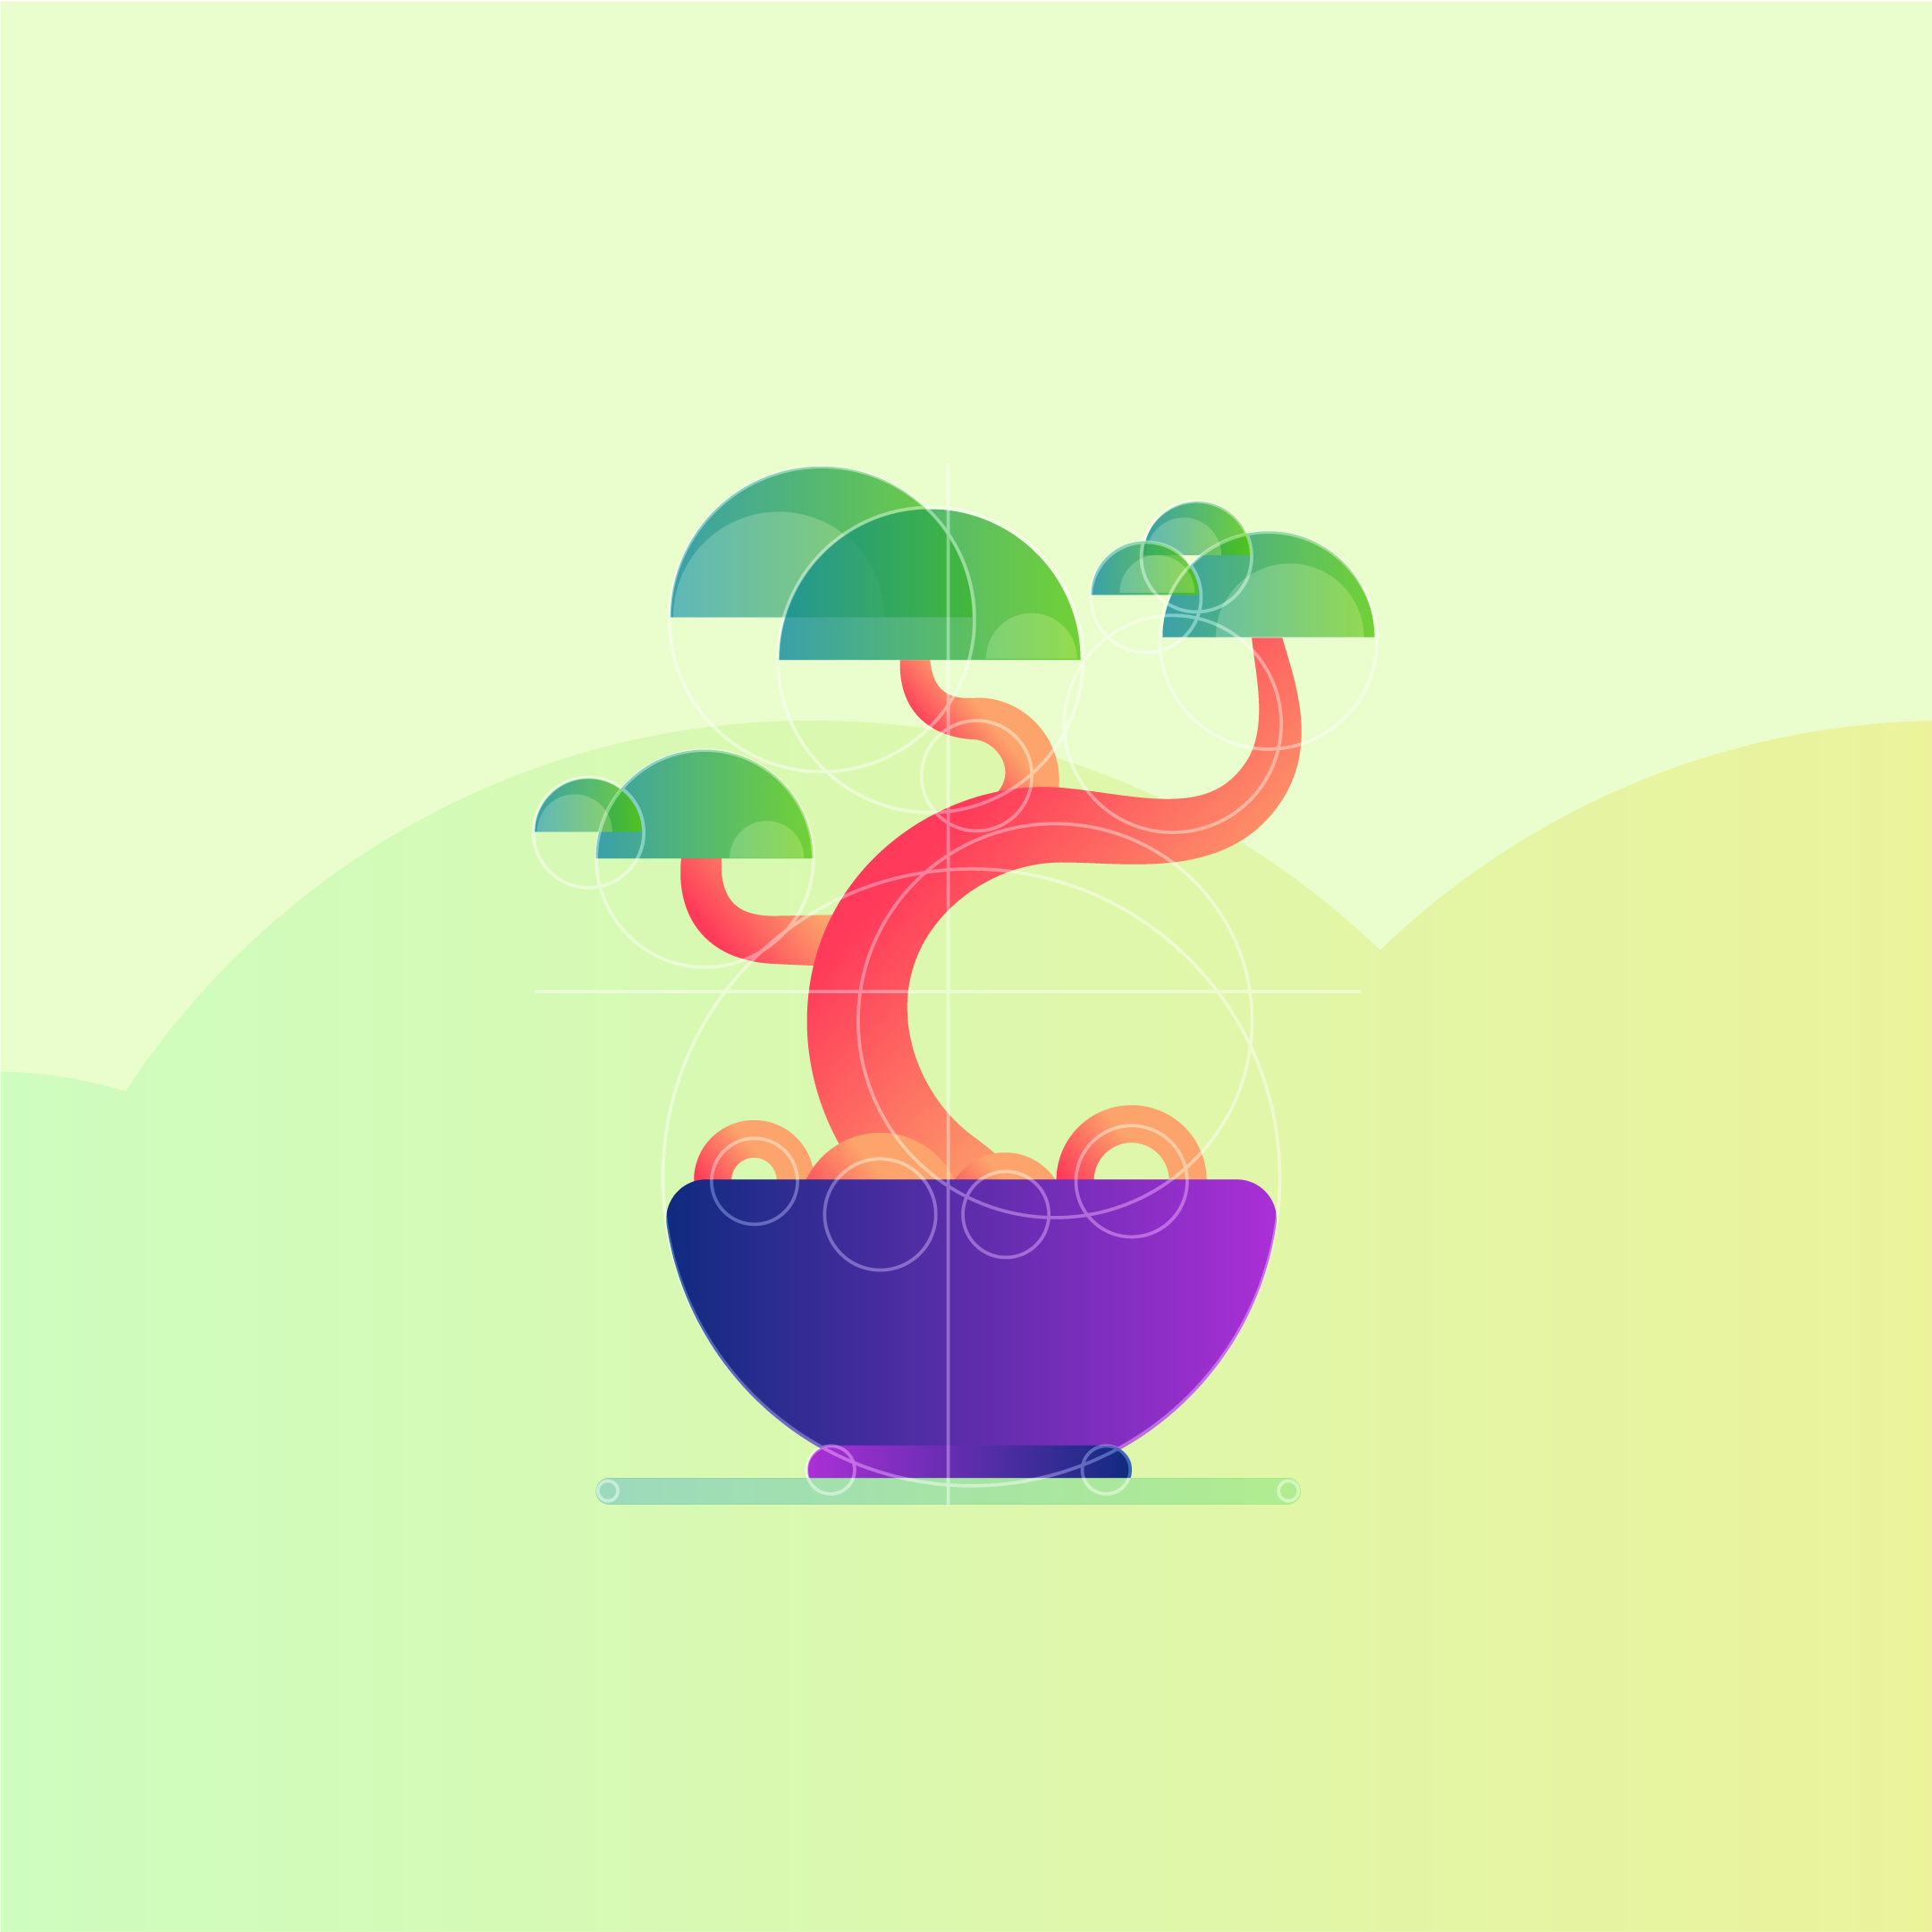 Bonsai tree graphic illustration for the Resource Guru branding project